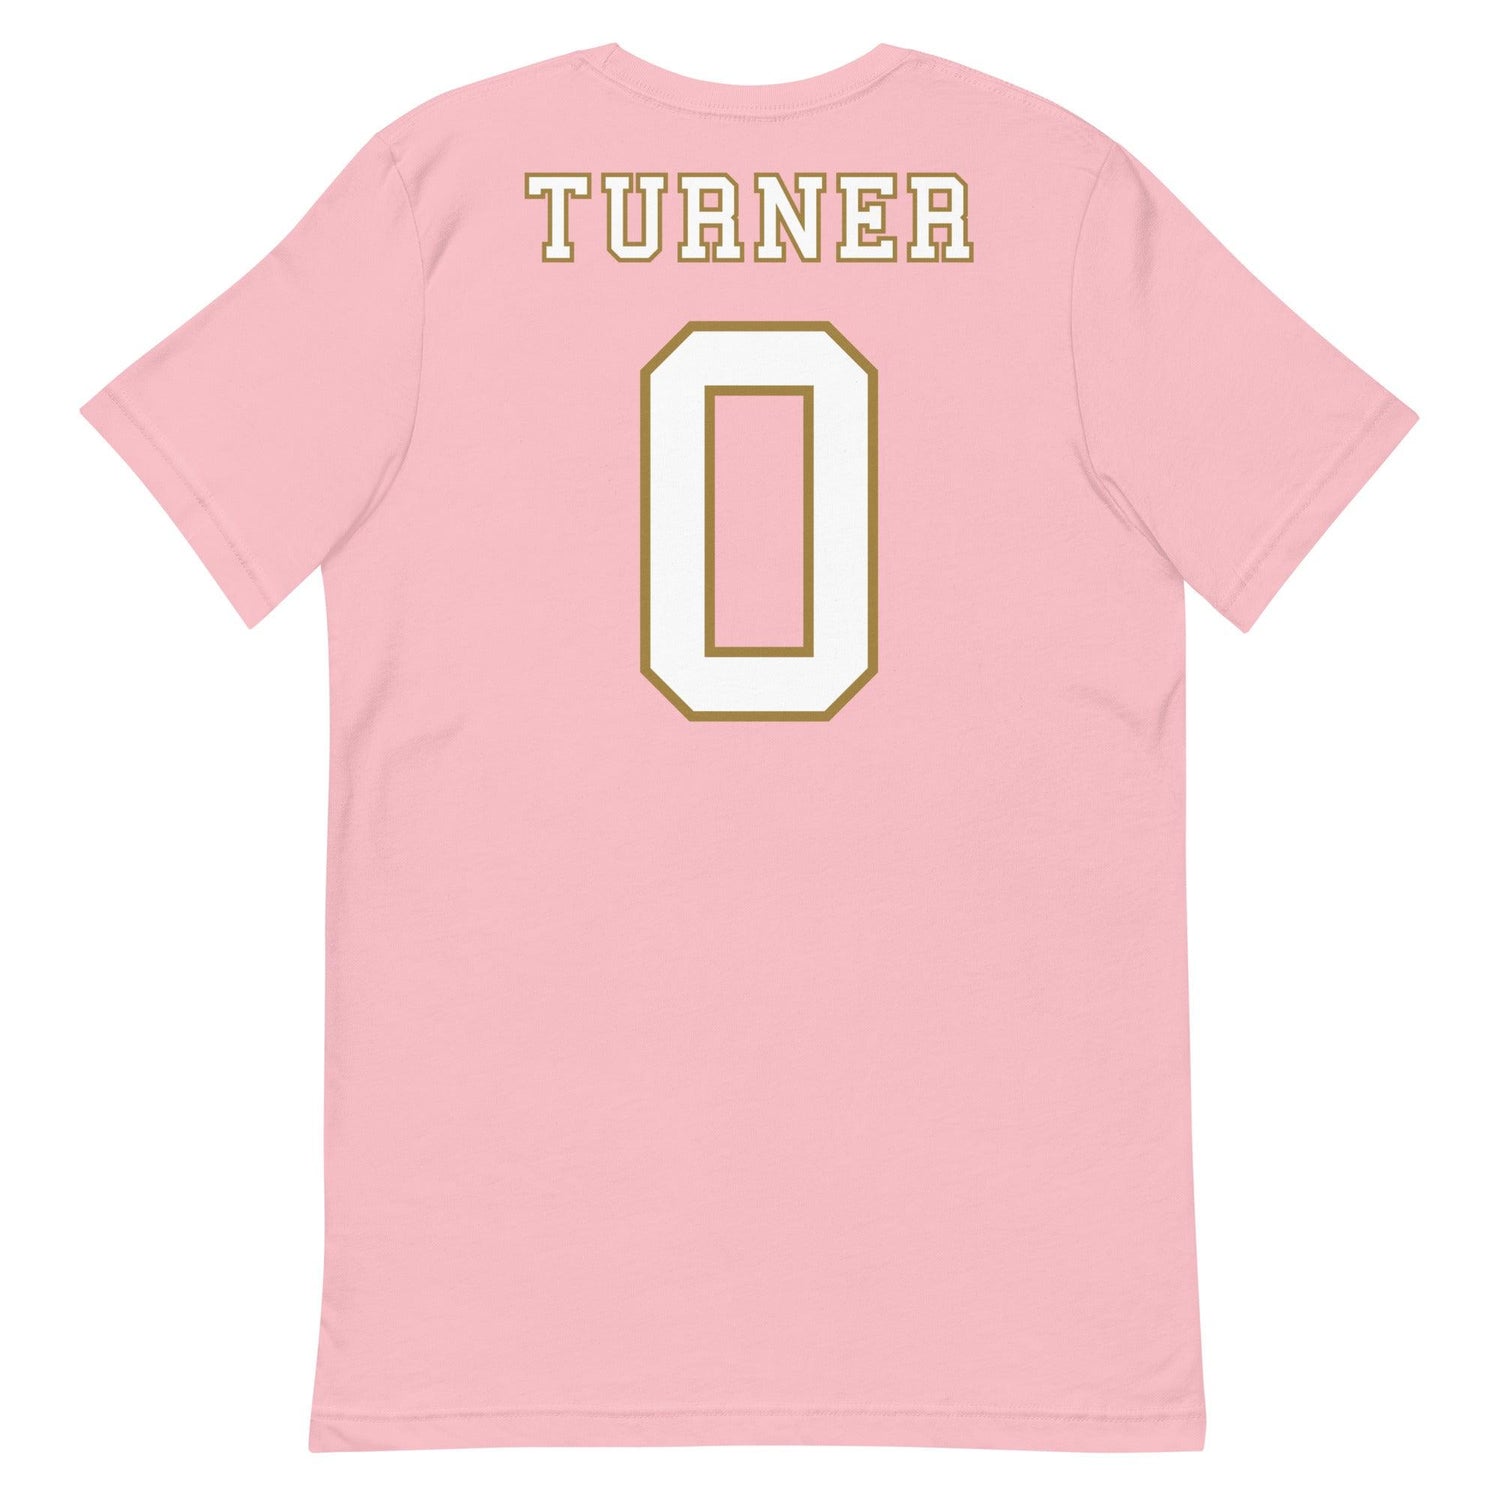 Christian Turner "Jersey" t-shirt - Fan Arch